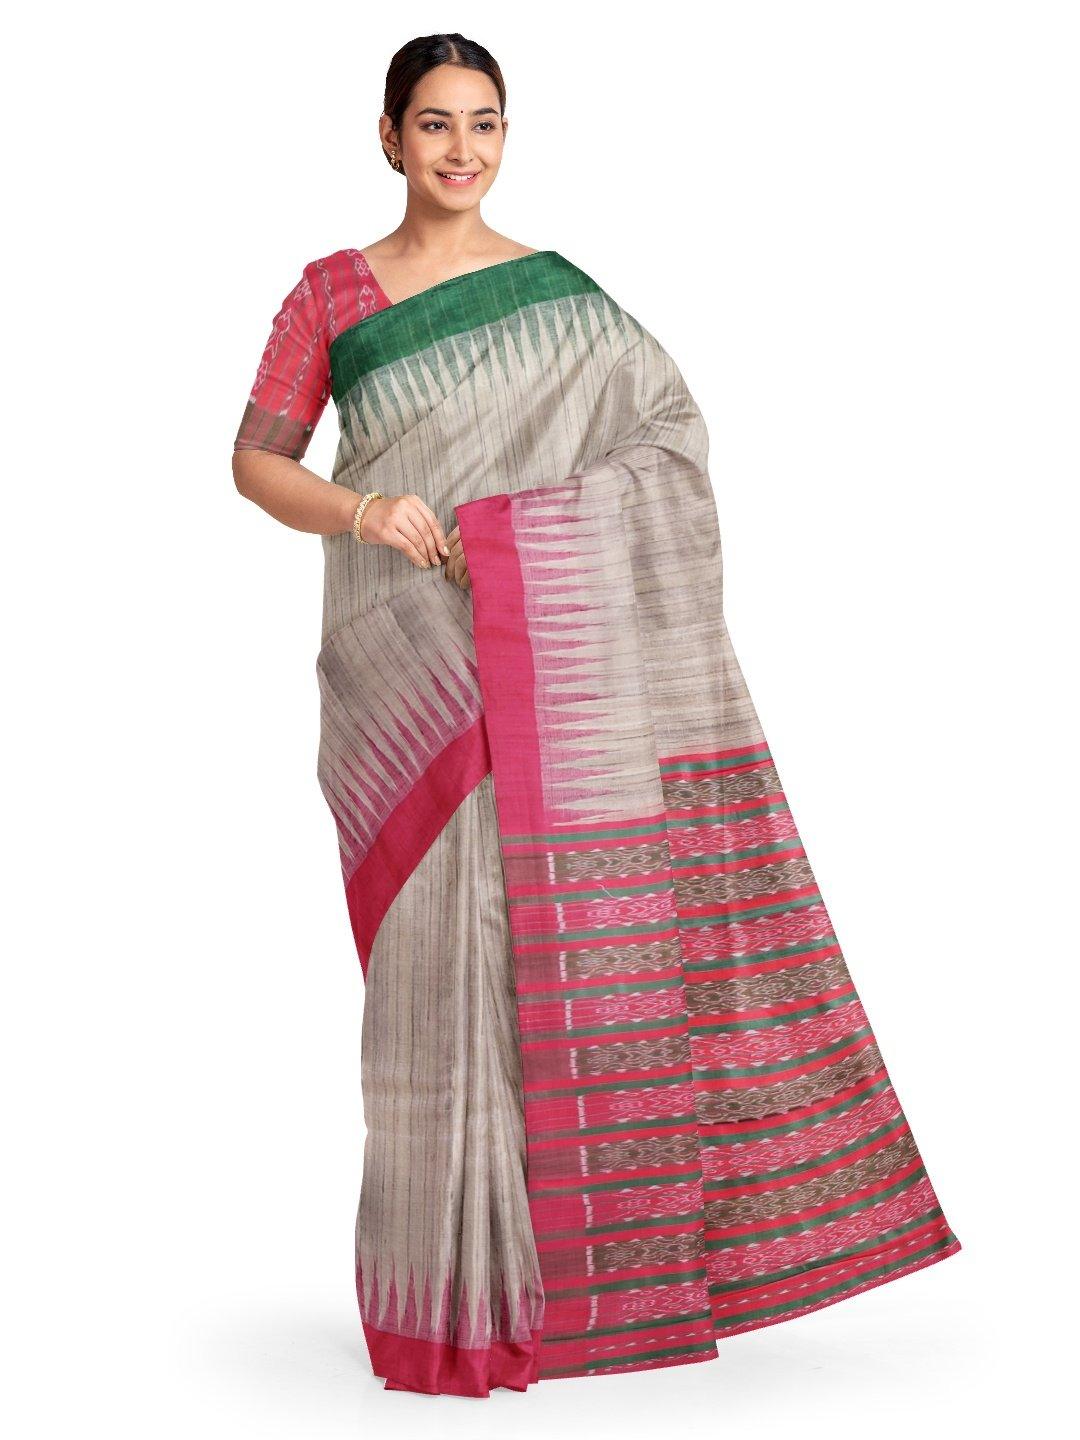 Beige Gangajamuna Tussar Silk Sambalpuri Saree - Crafts Collection